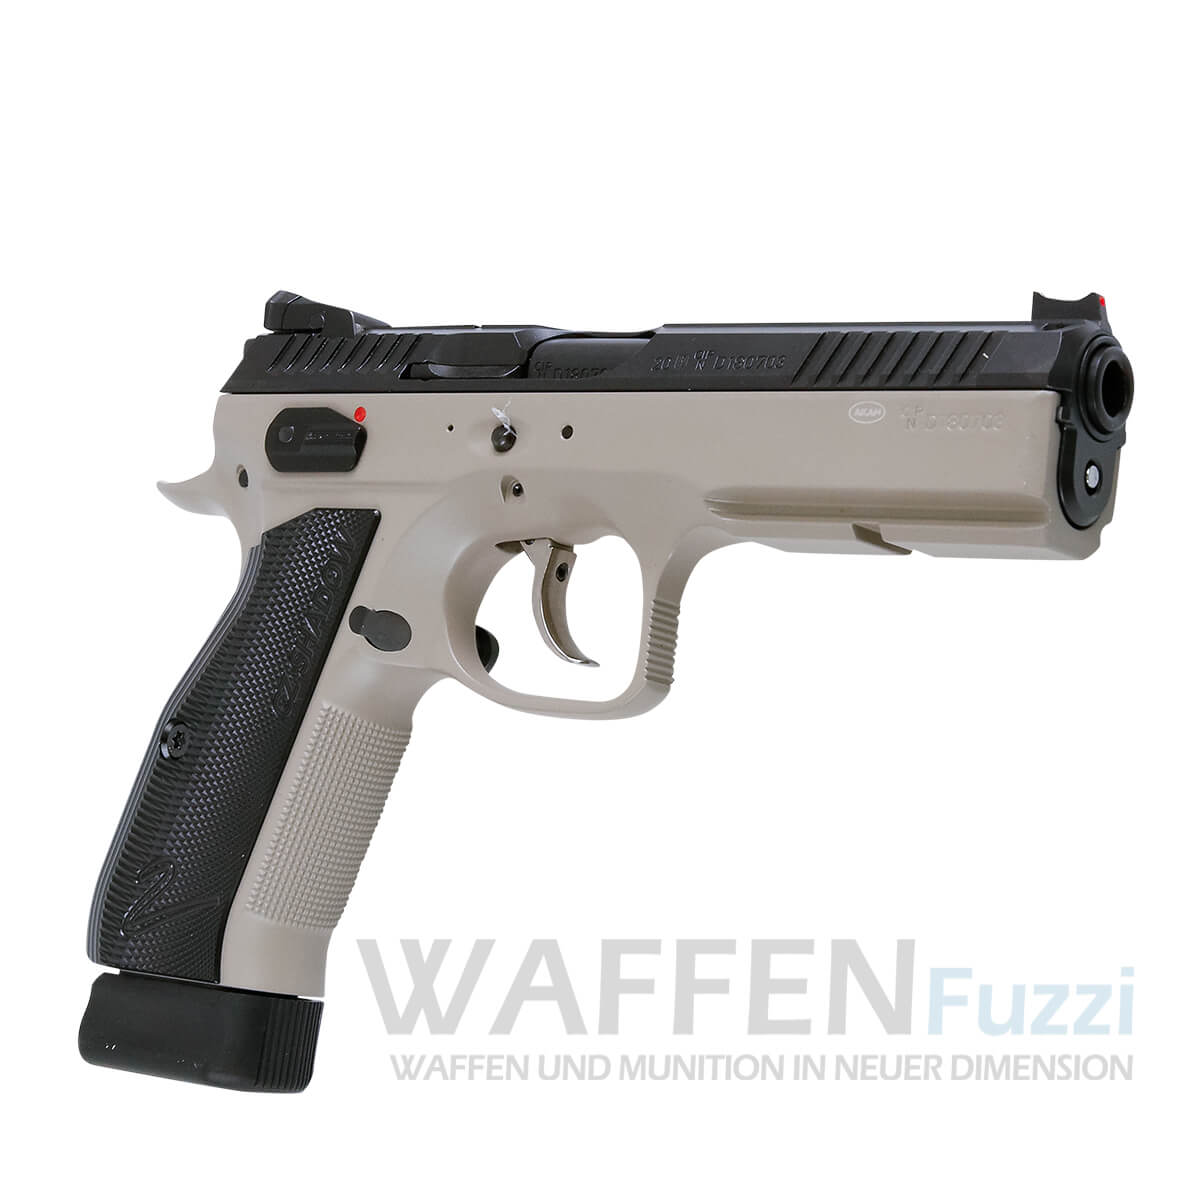 Preiswerte CZ 75 Shadow 2 Urban Grey Kaliber 9mm Luger